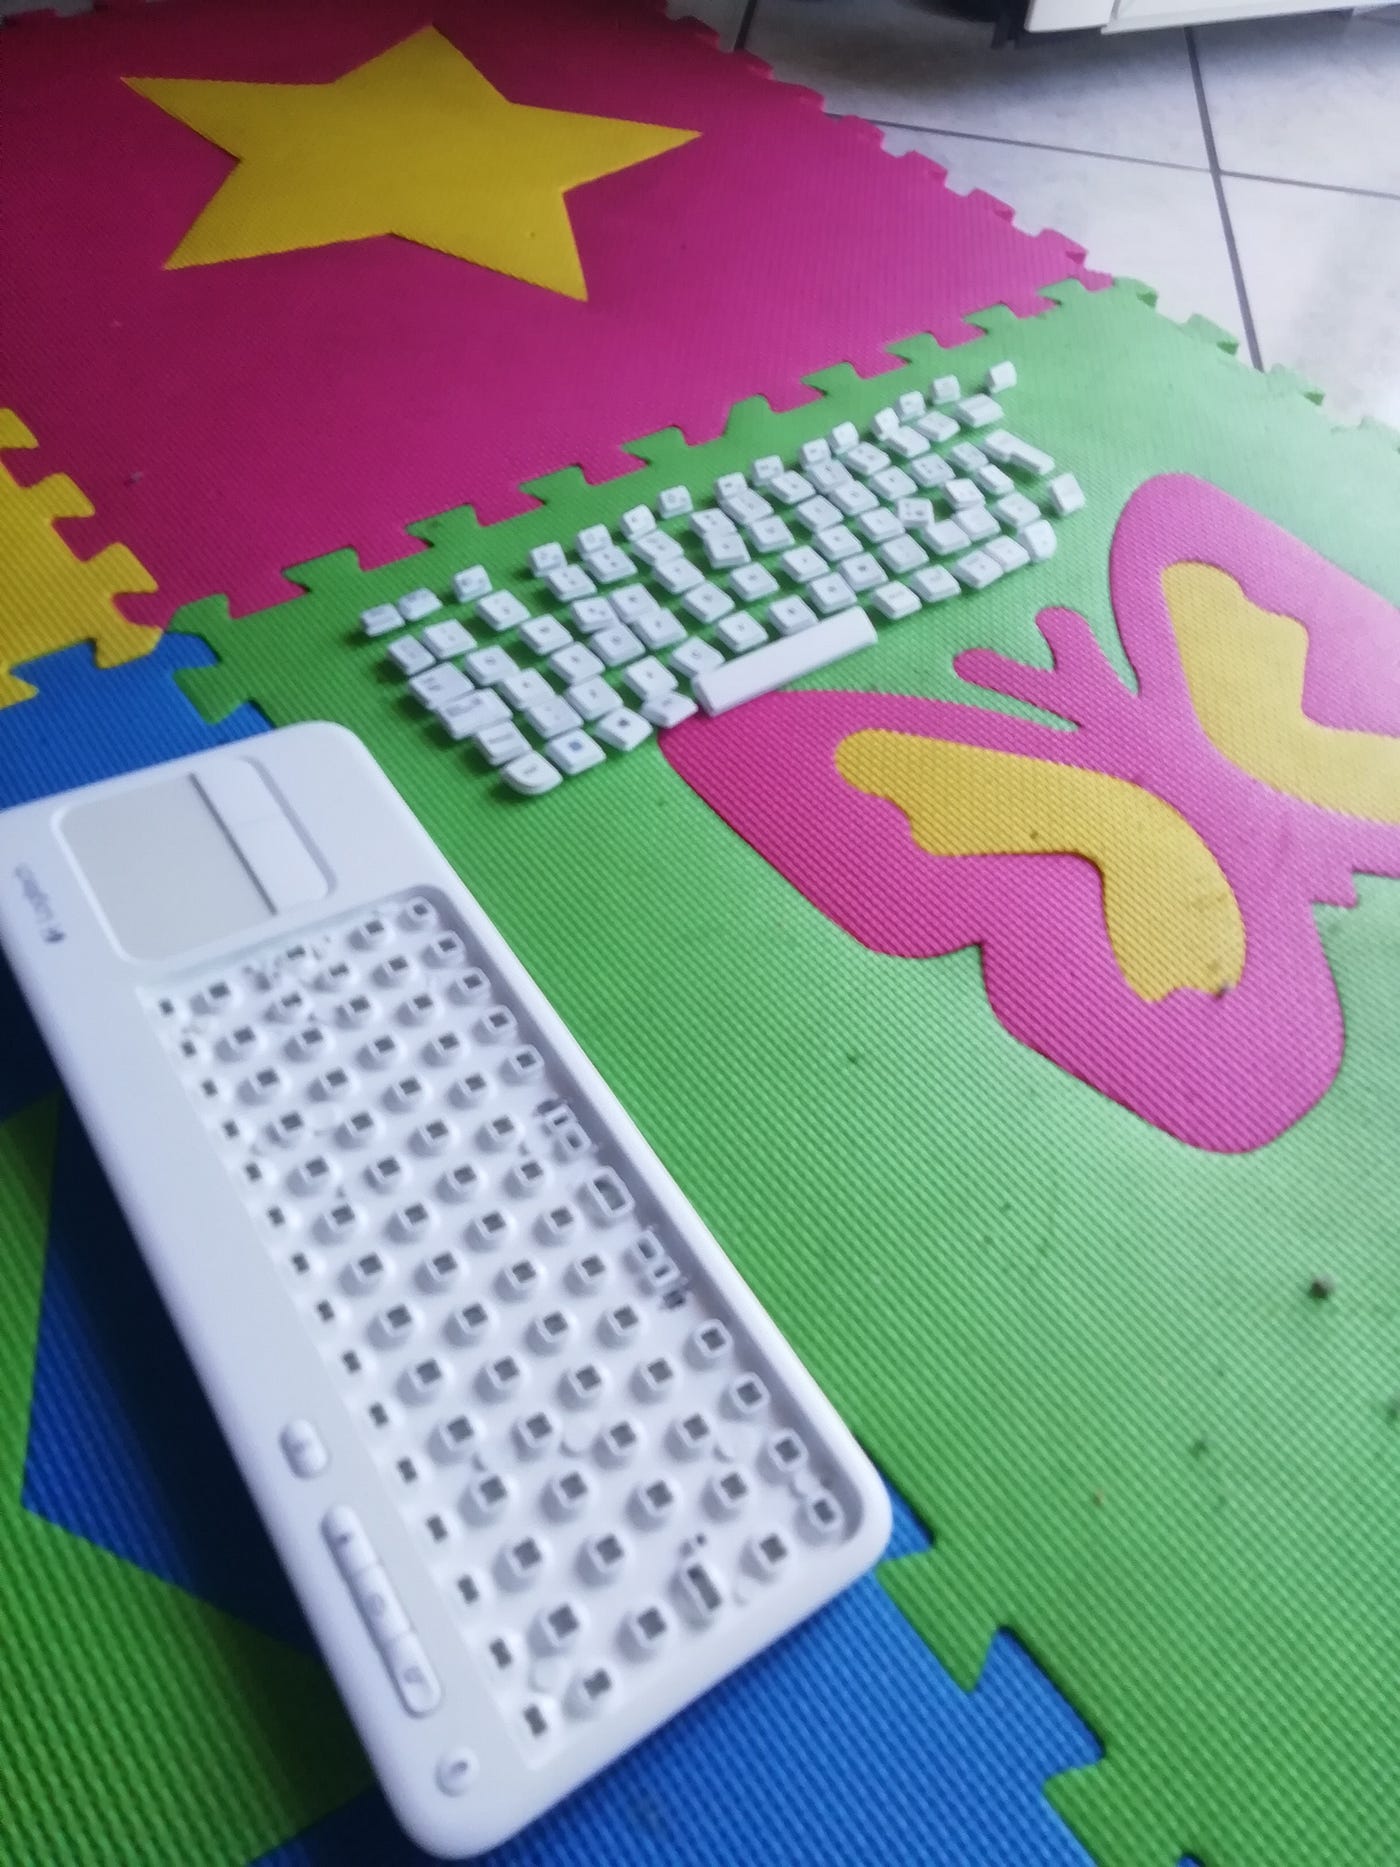 Clean the keys of Logitech k400r keyboard | by Nicola Landro | Medium